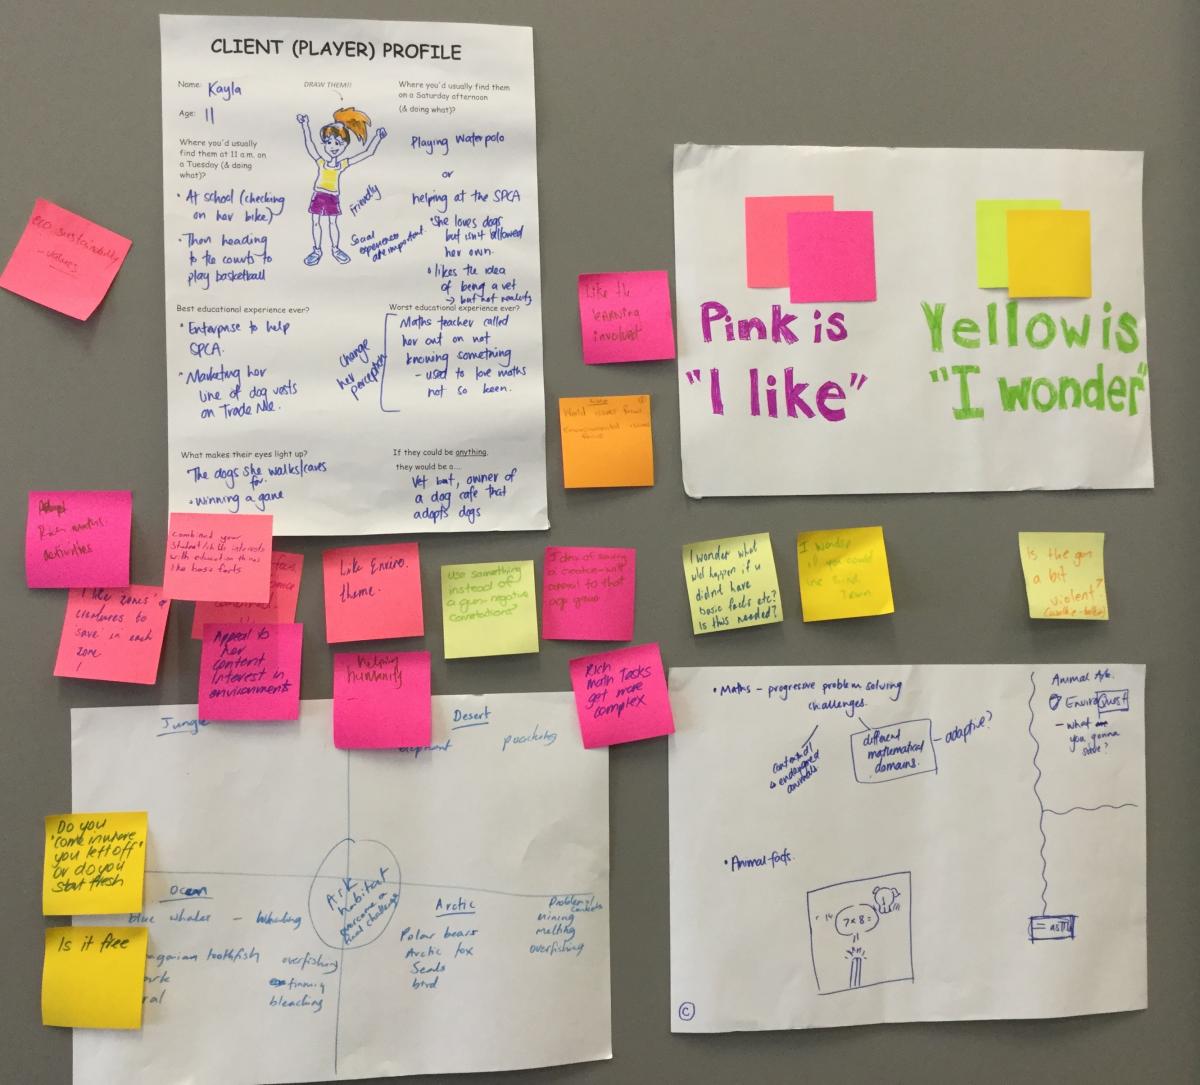 "I like" and "I wonder" feedback in a game design workshop for teachers